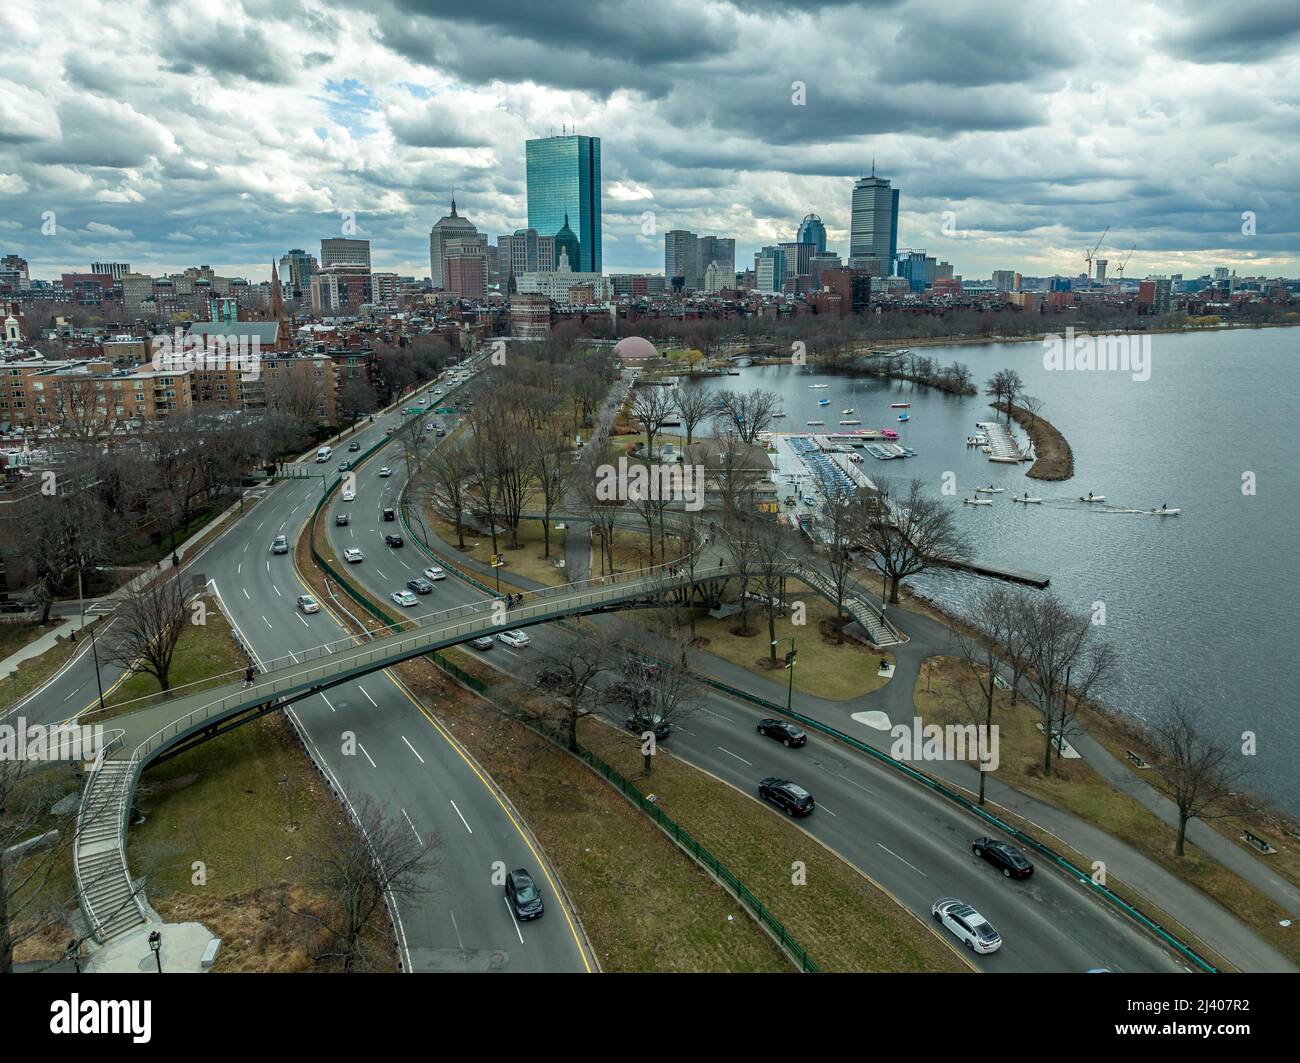 36 Boston Beacon Hill Fotos, Imagens e Fundo para Download Gratuito -  Pngtree